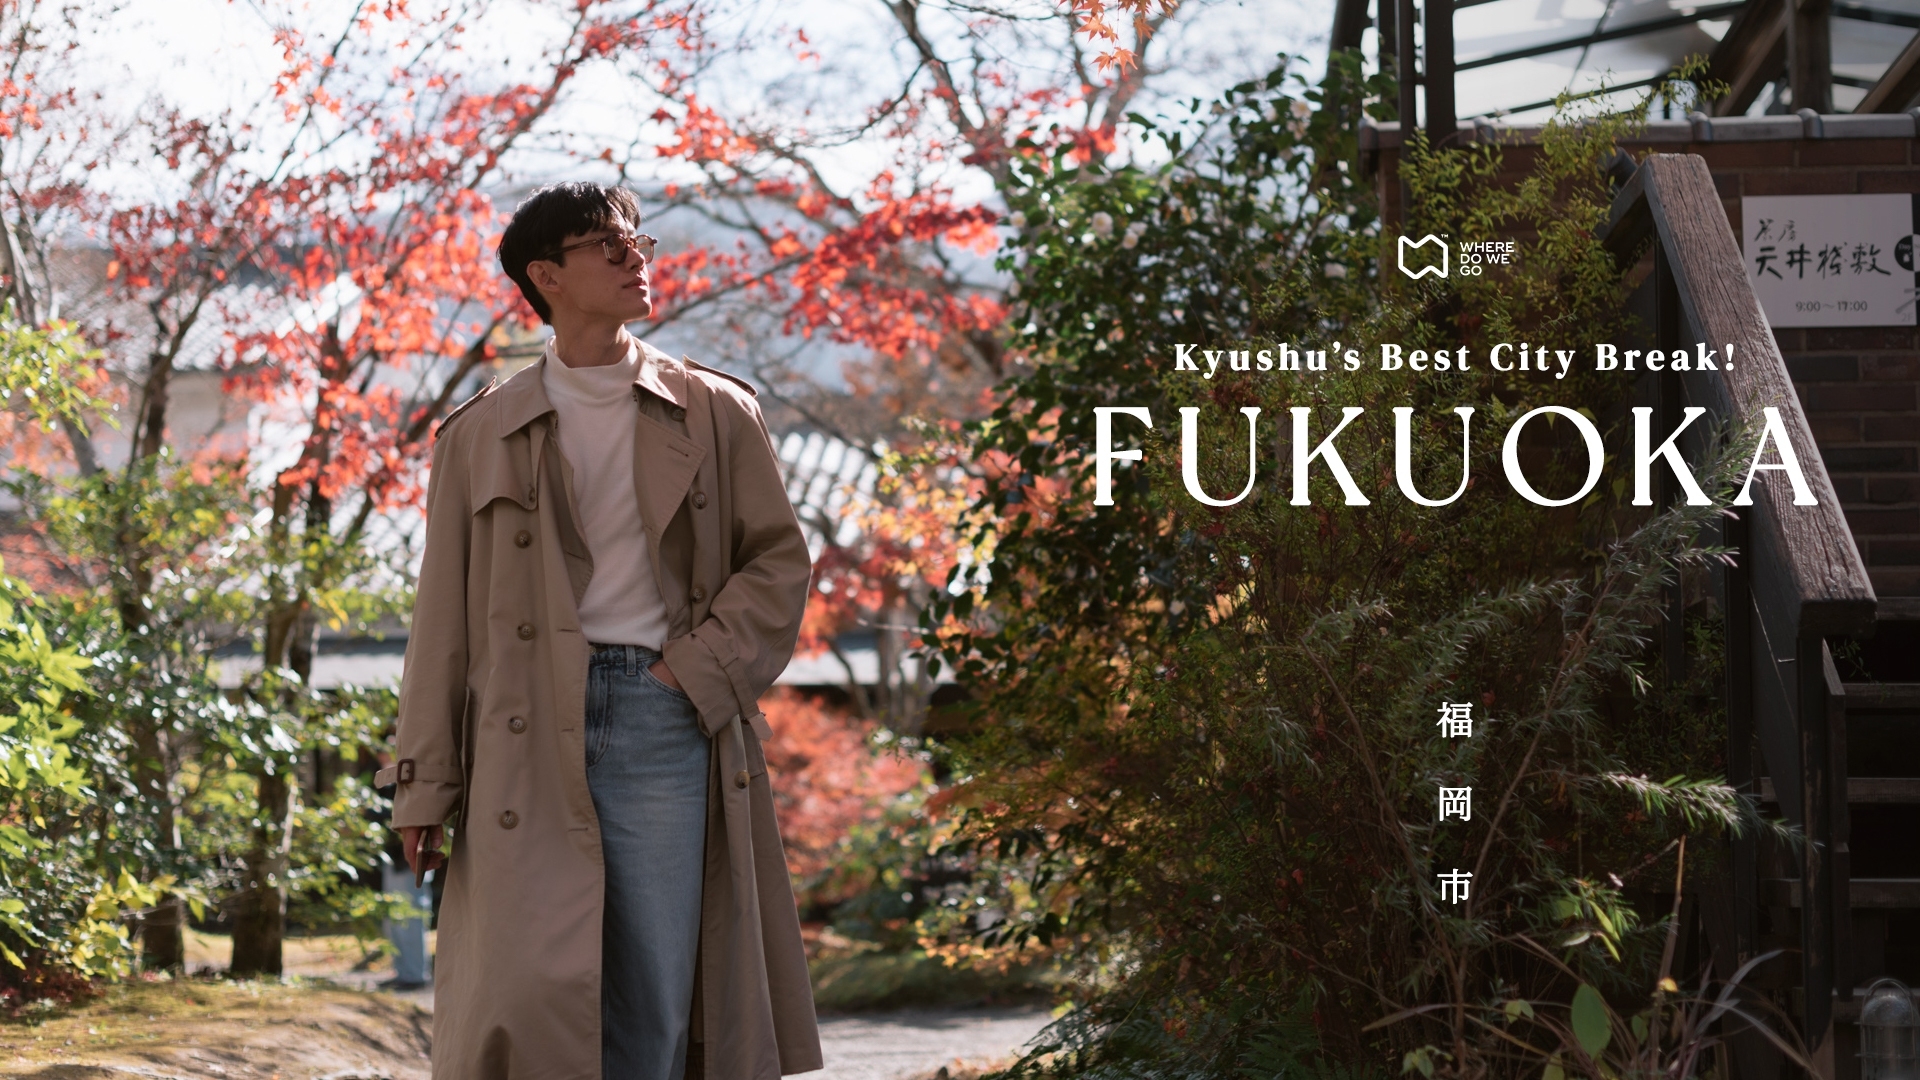 &#8216;FUKUOKA&#8217; Kyushu&#8217;s Best City Break!